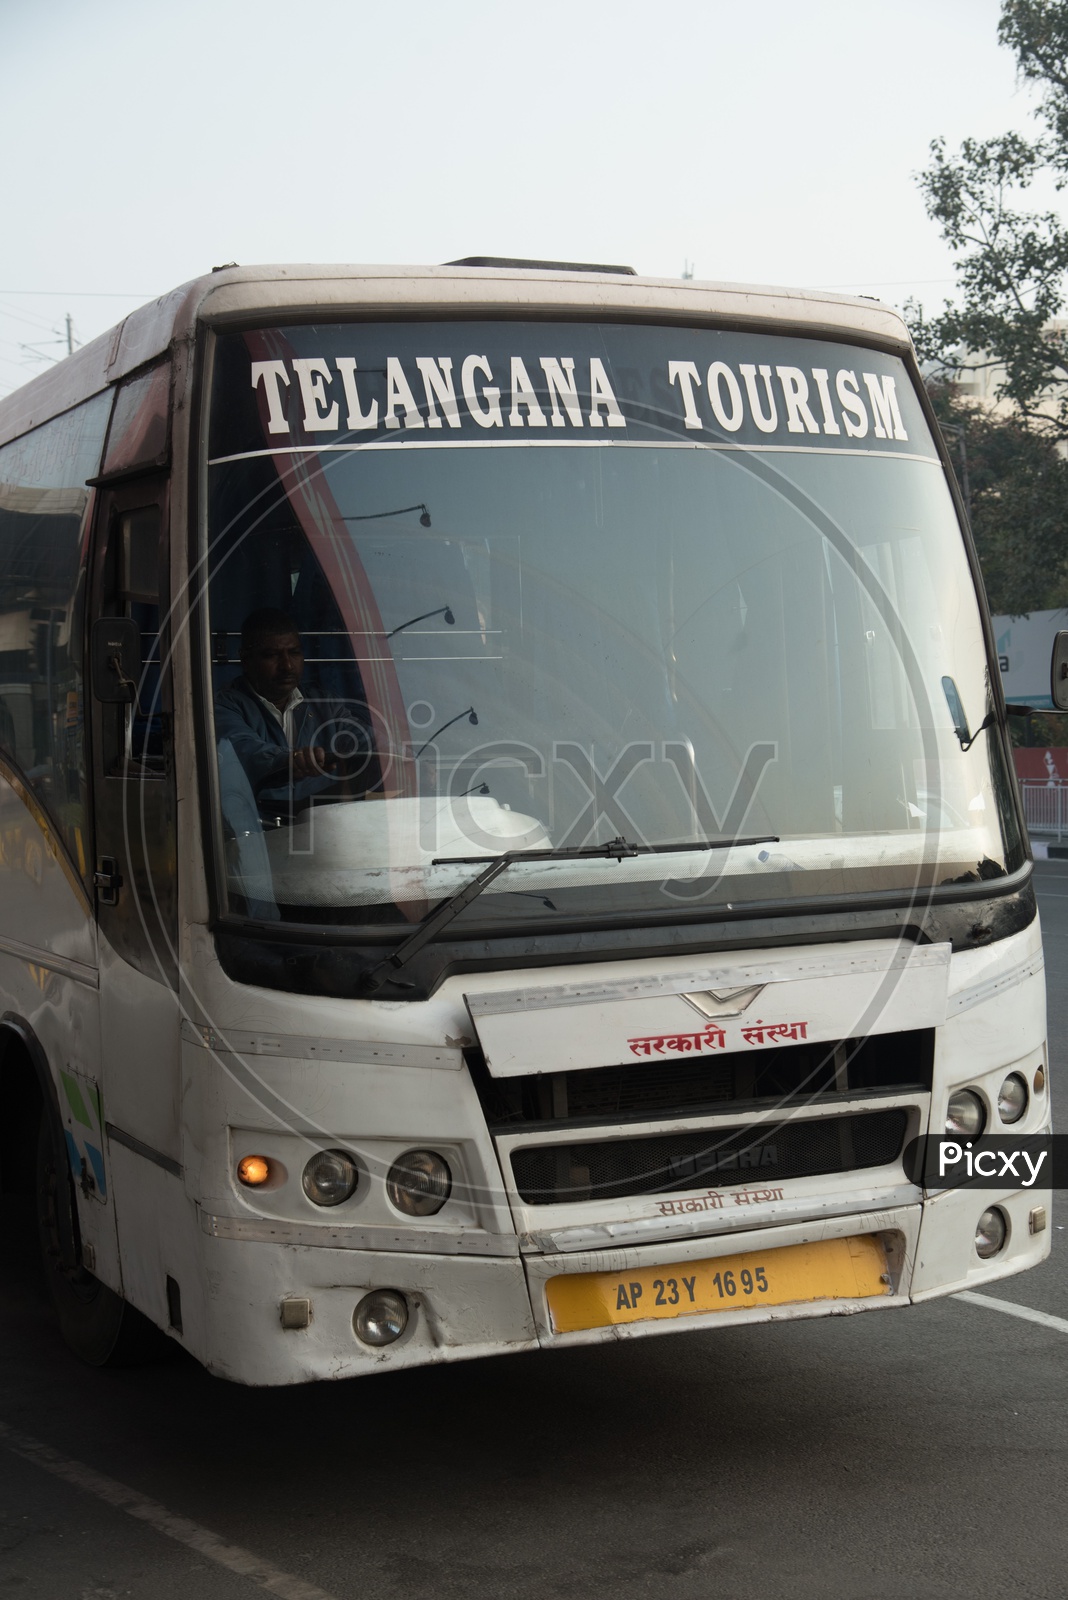 Telangana Tourism Bus